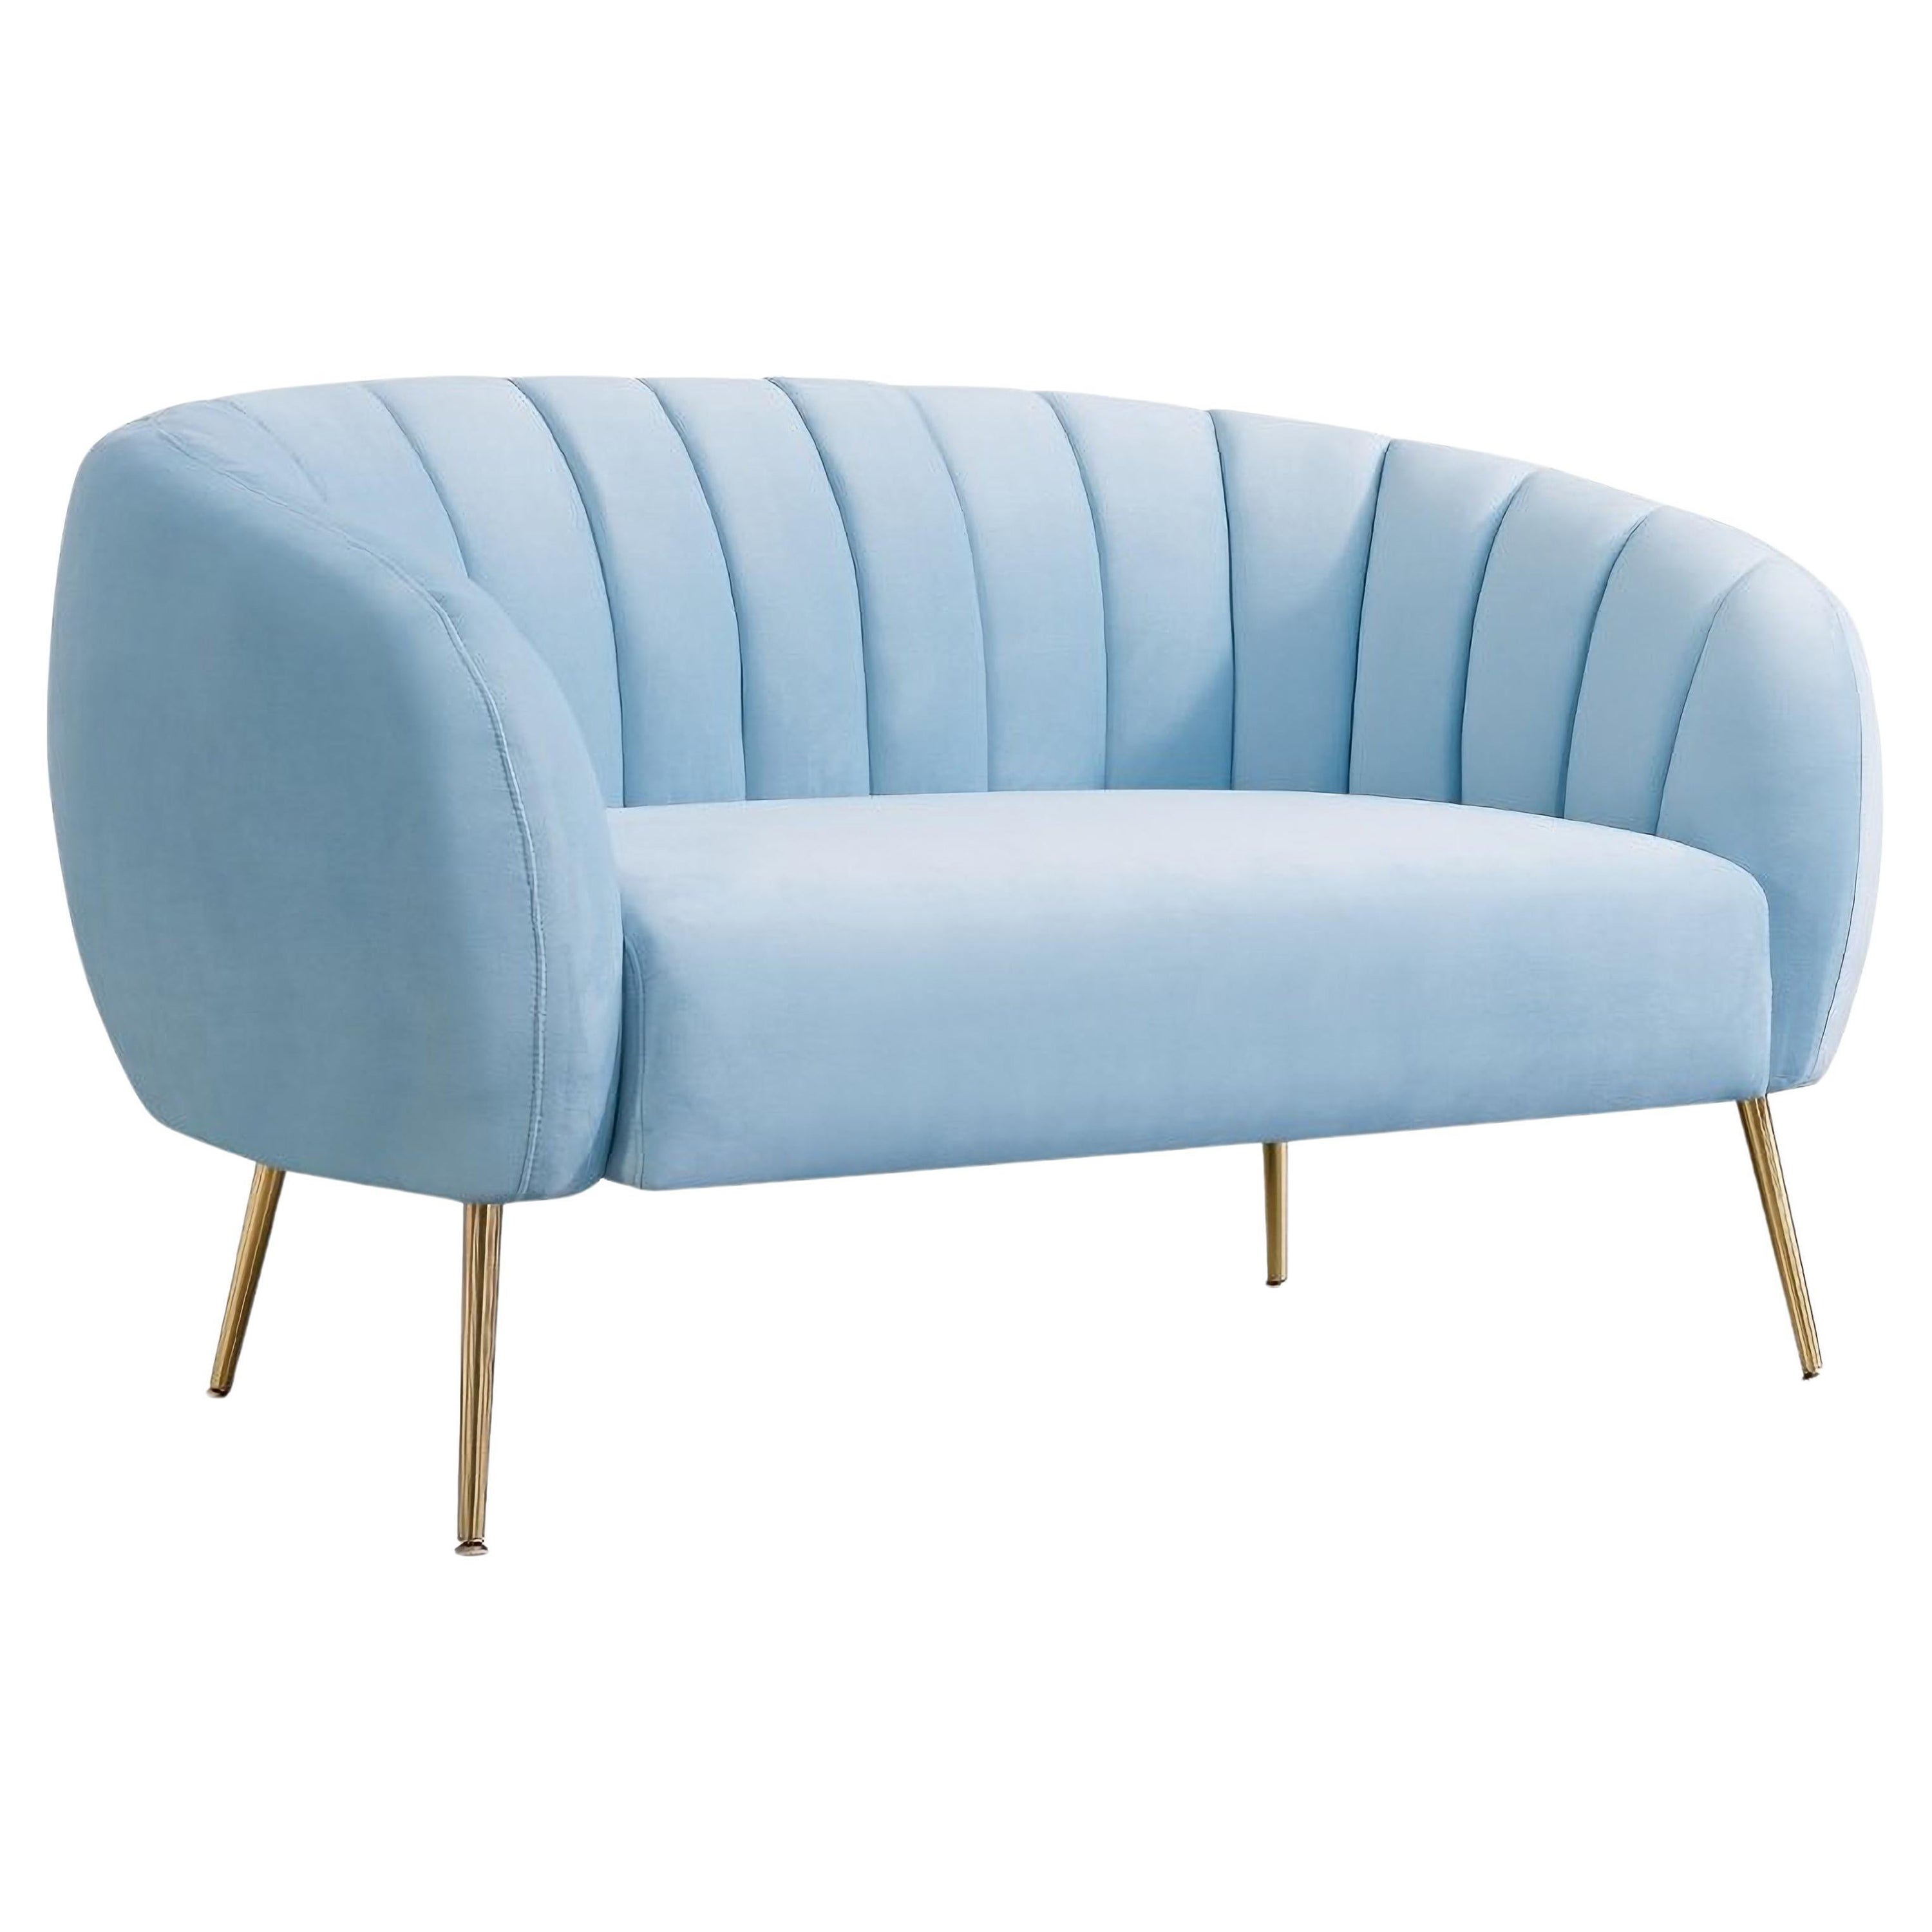 Hellblaues gepolstertes 2sitziges Sofa aus Samt, neu